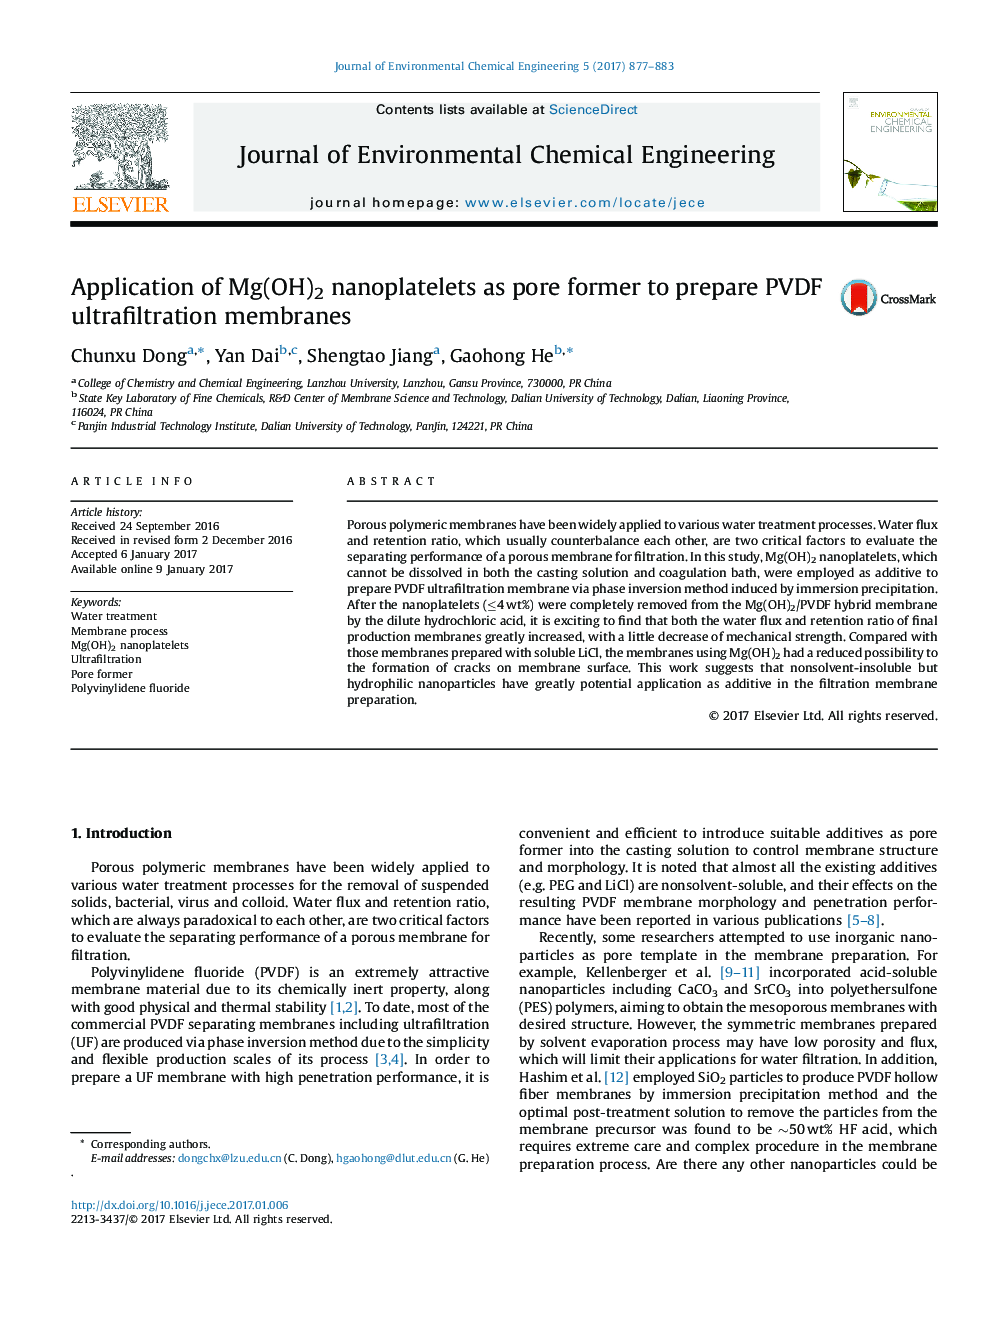 Application of Mg(OH)2 nanoplatelets as pore former to prepare PVDF ultrafiltration membranes